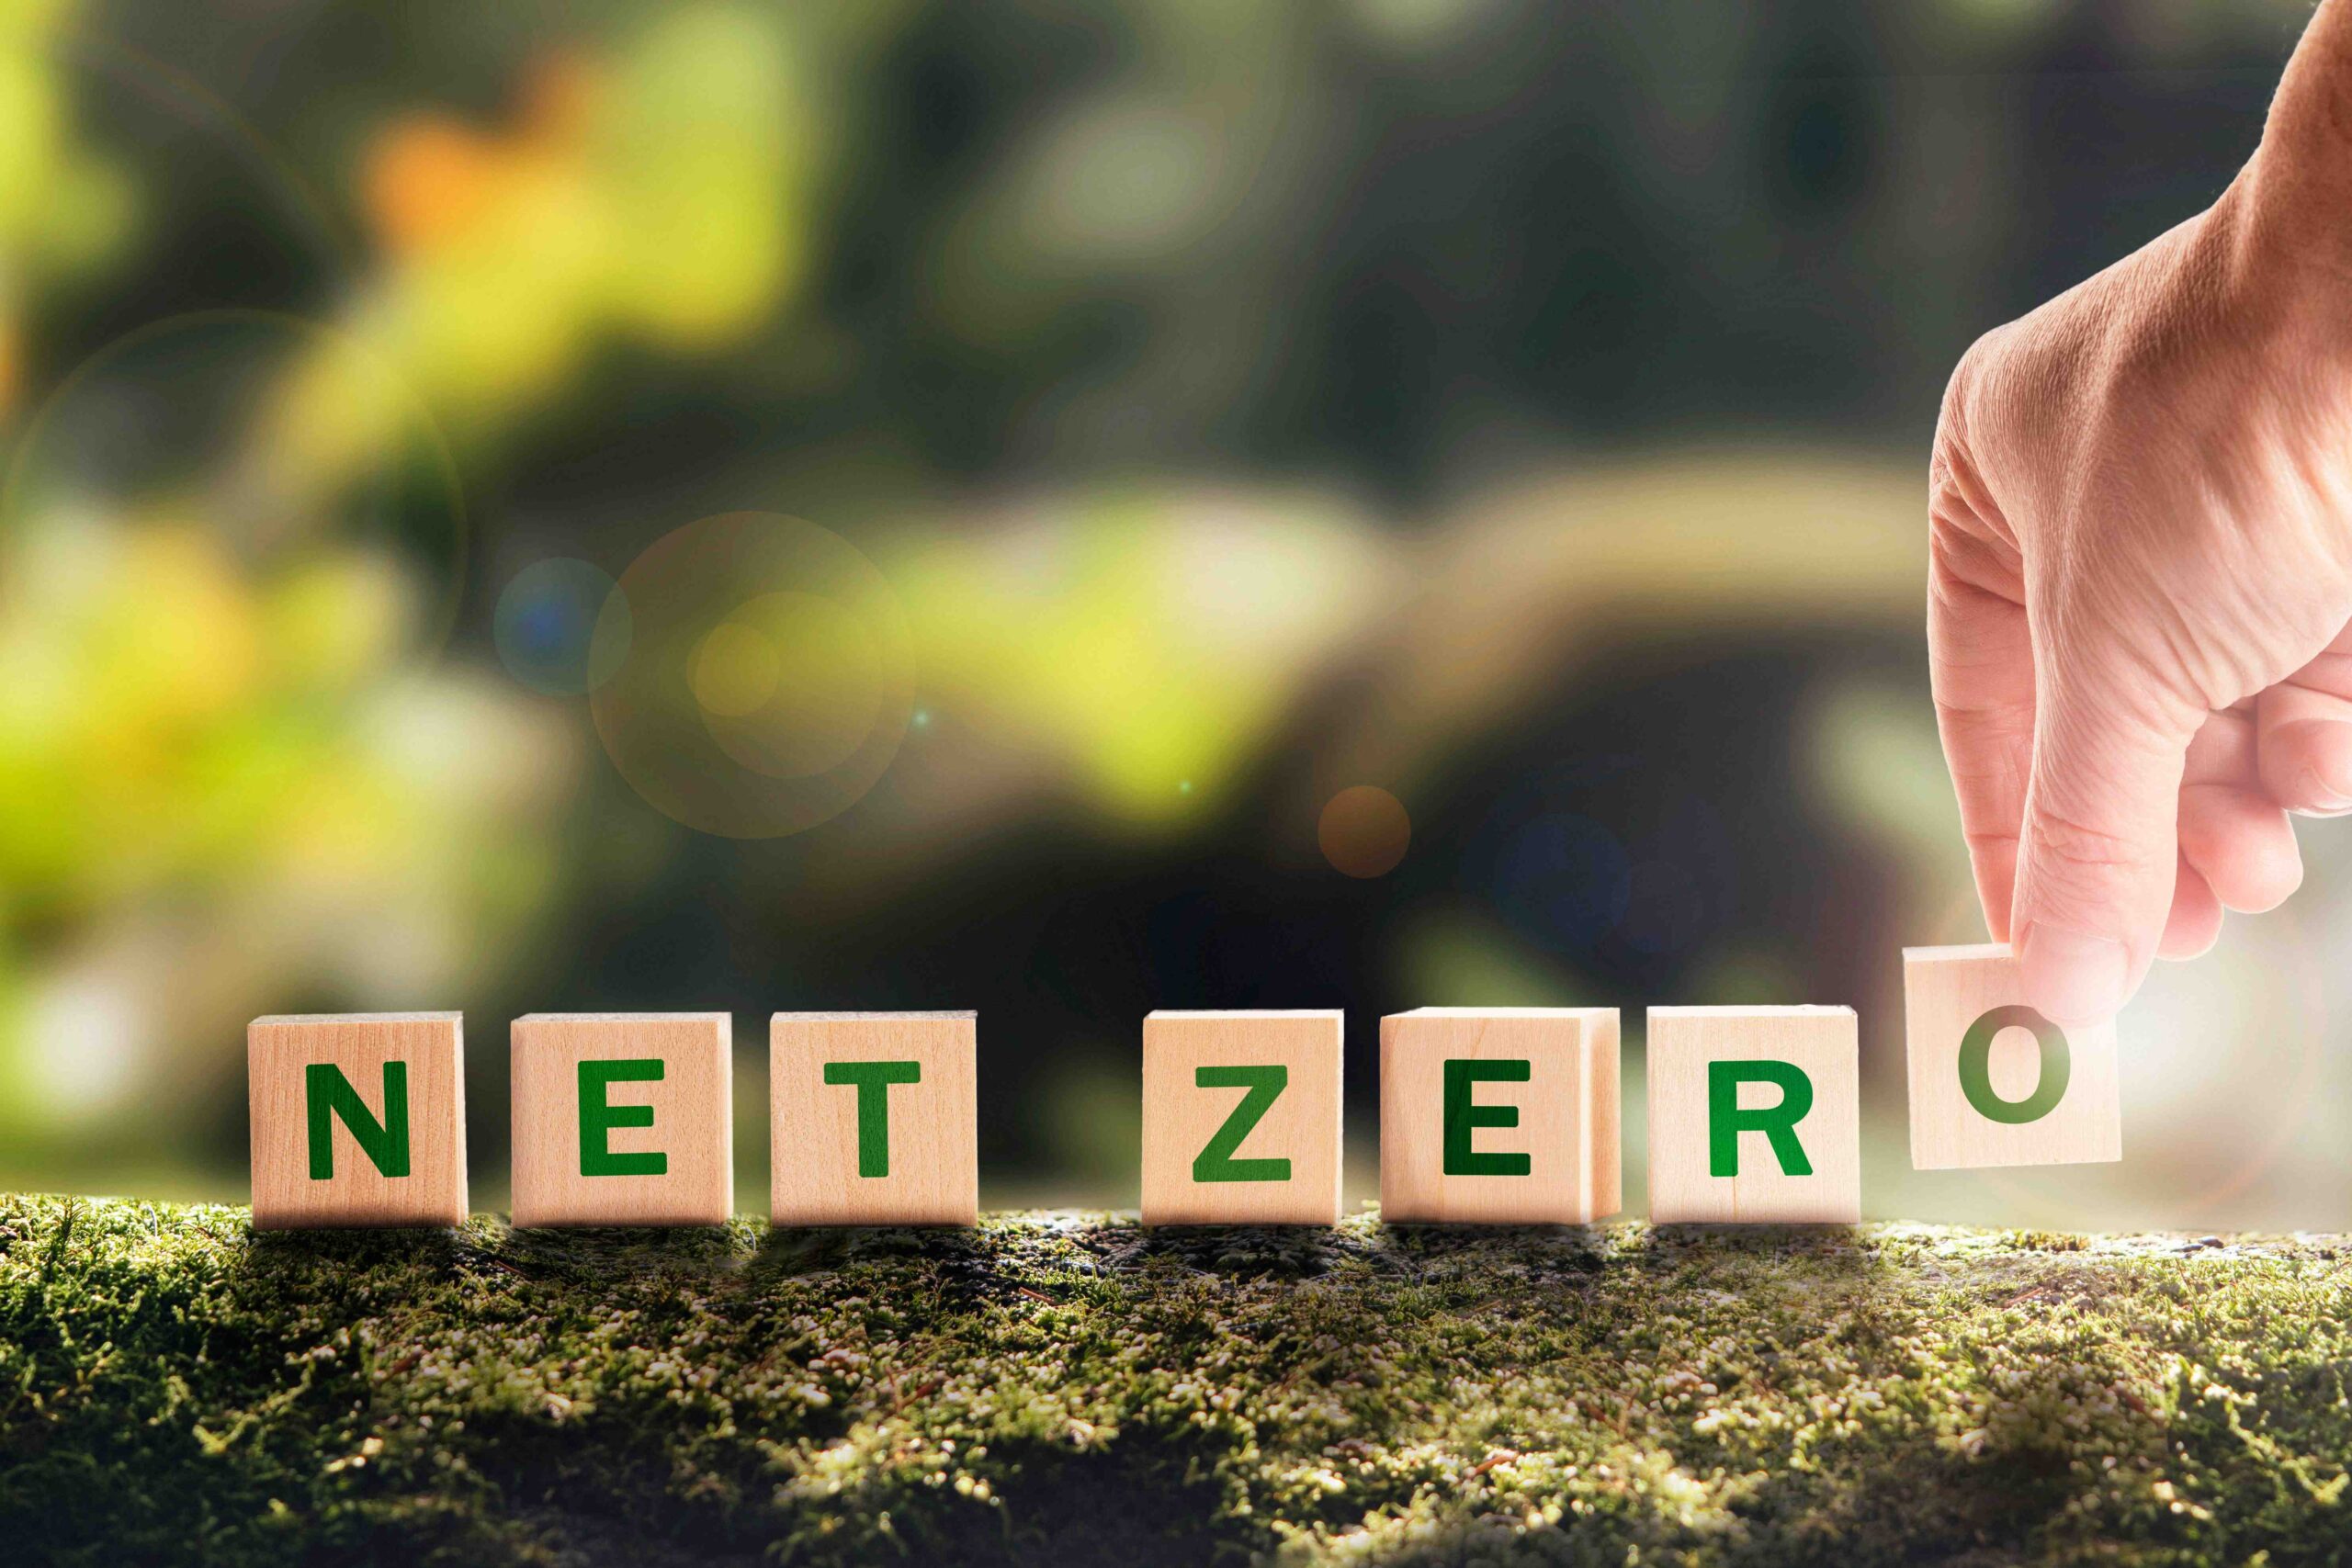 “Net Zero” คืออะไร ทำไม “ต้นไม้” ถึงเป็นหนึ่งในตัวช่วยที่ใครๆ ต่างคอนเฟิร์มว่า “ใช่”!